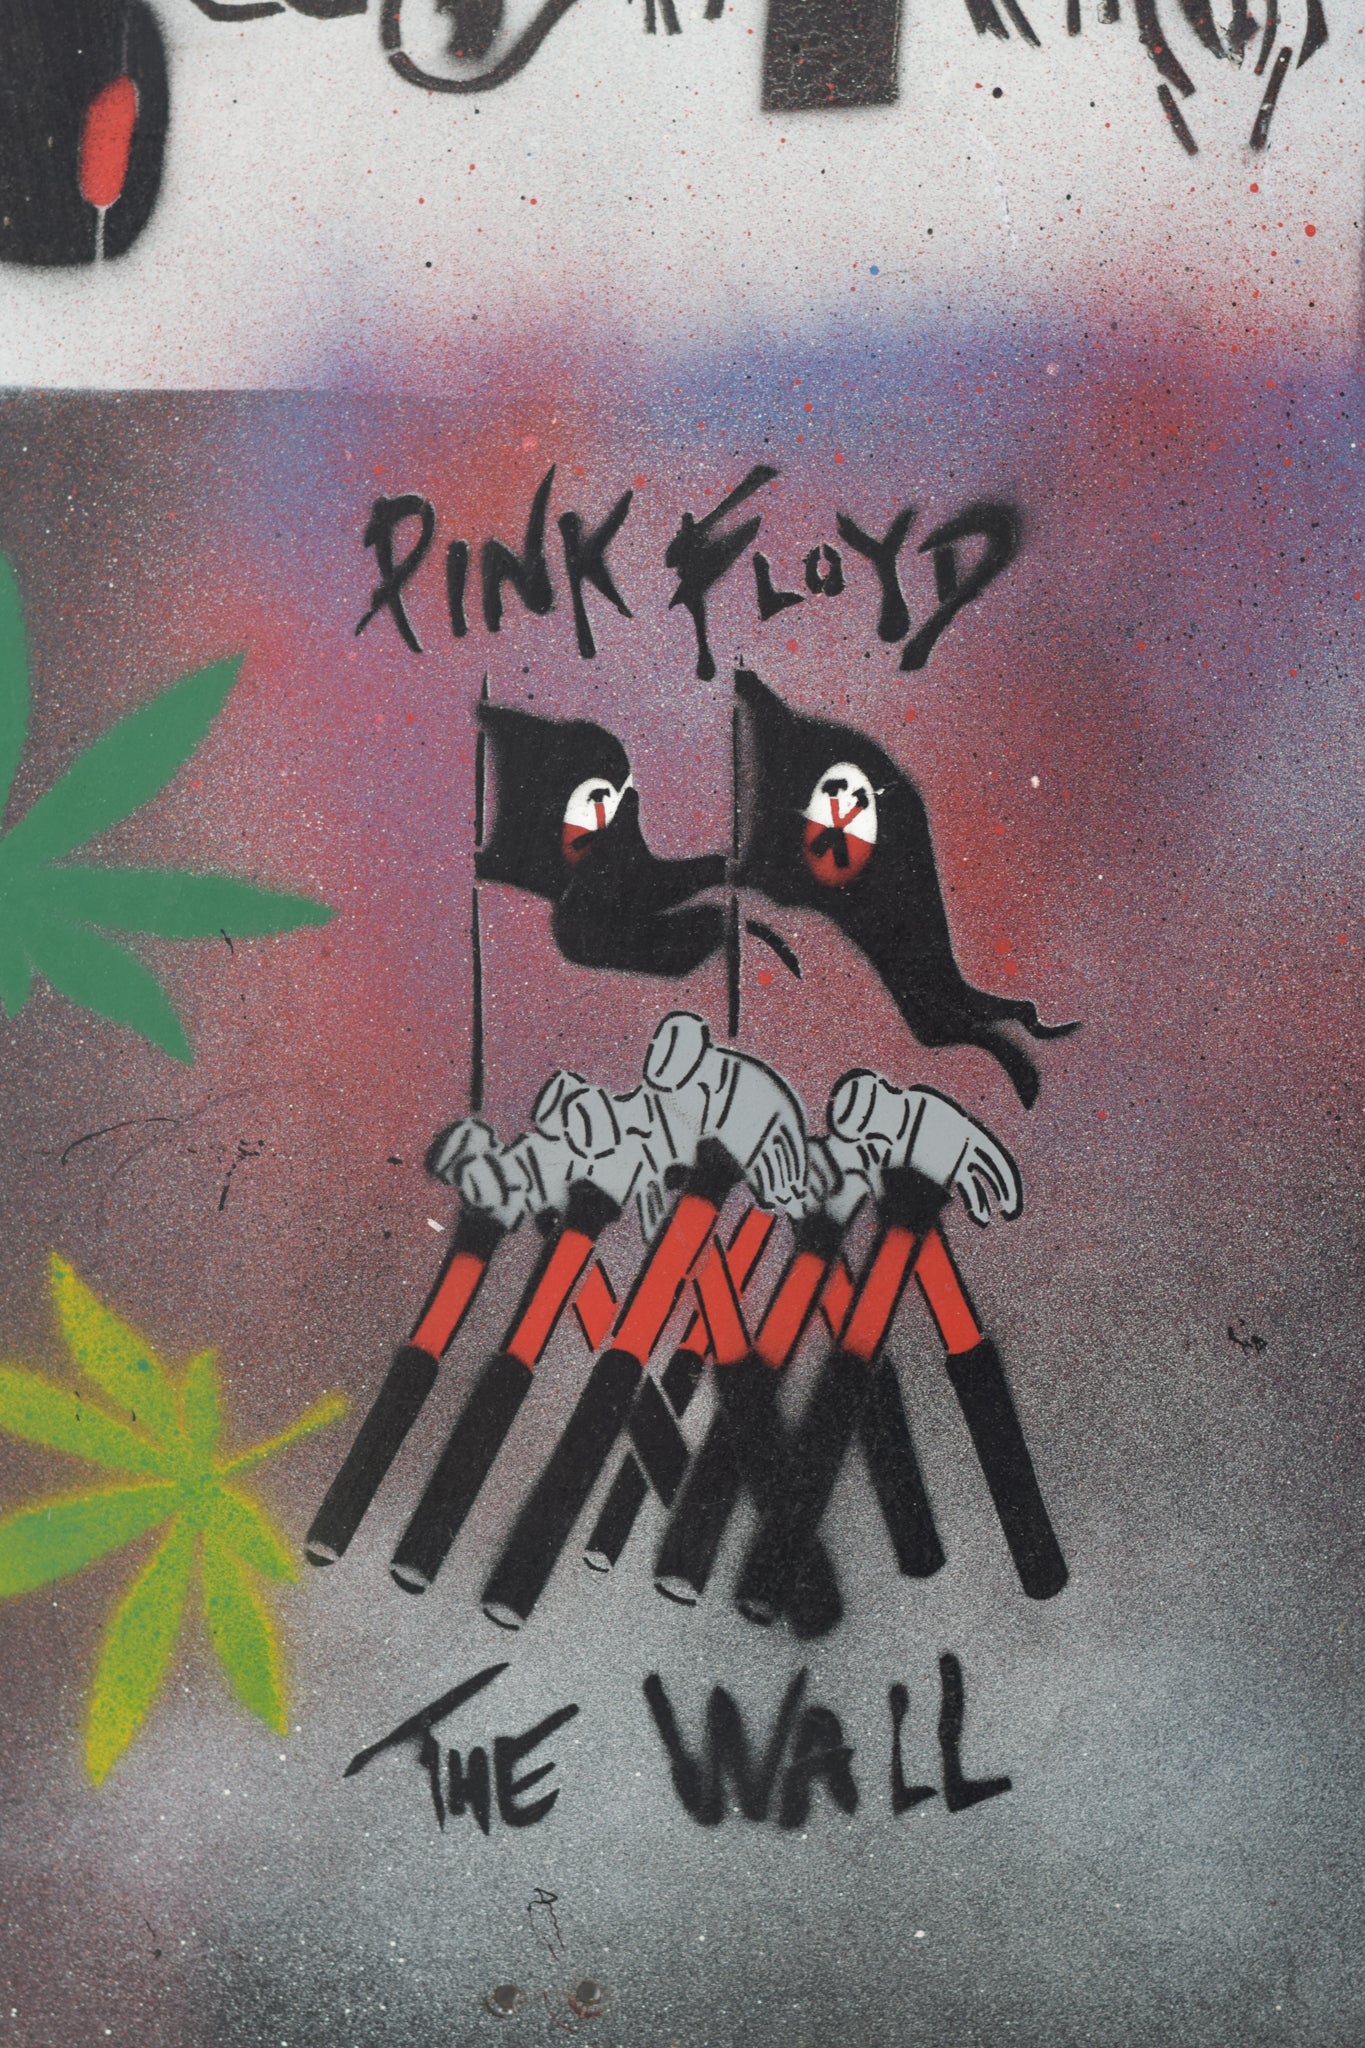 Street Art with Graffiti design_Pink Floyd The Wall